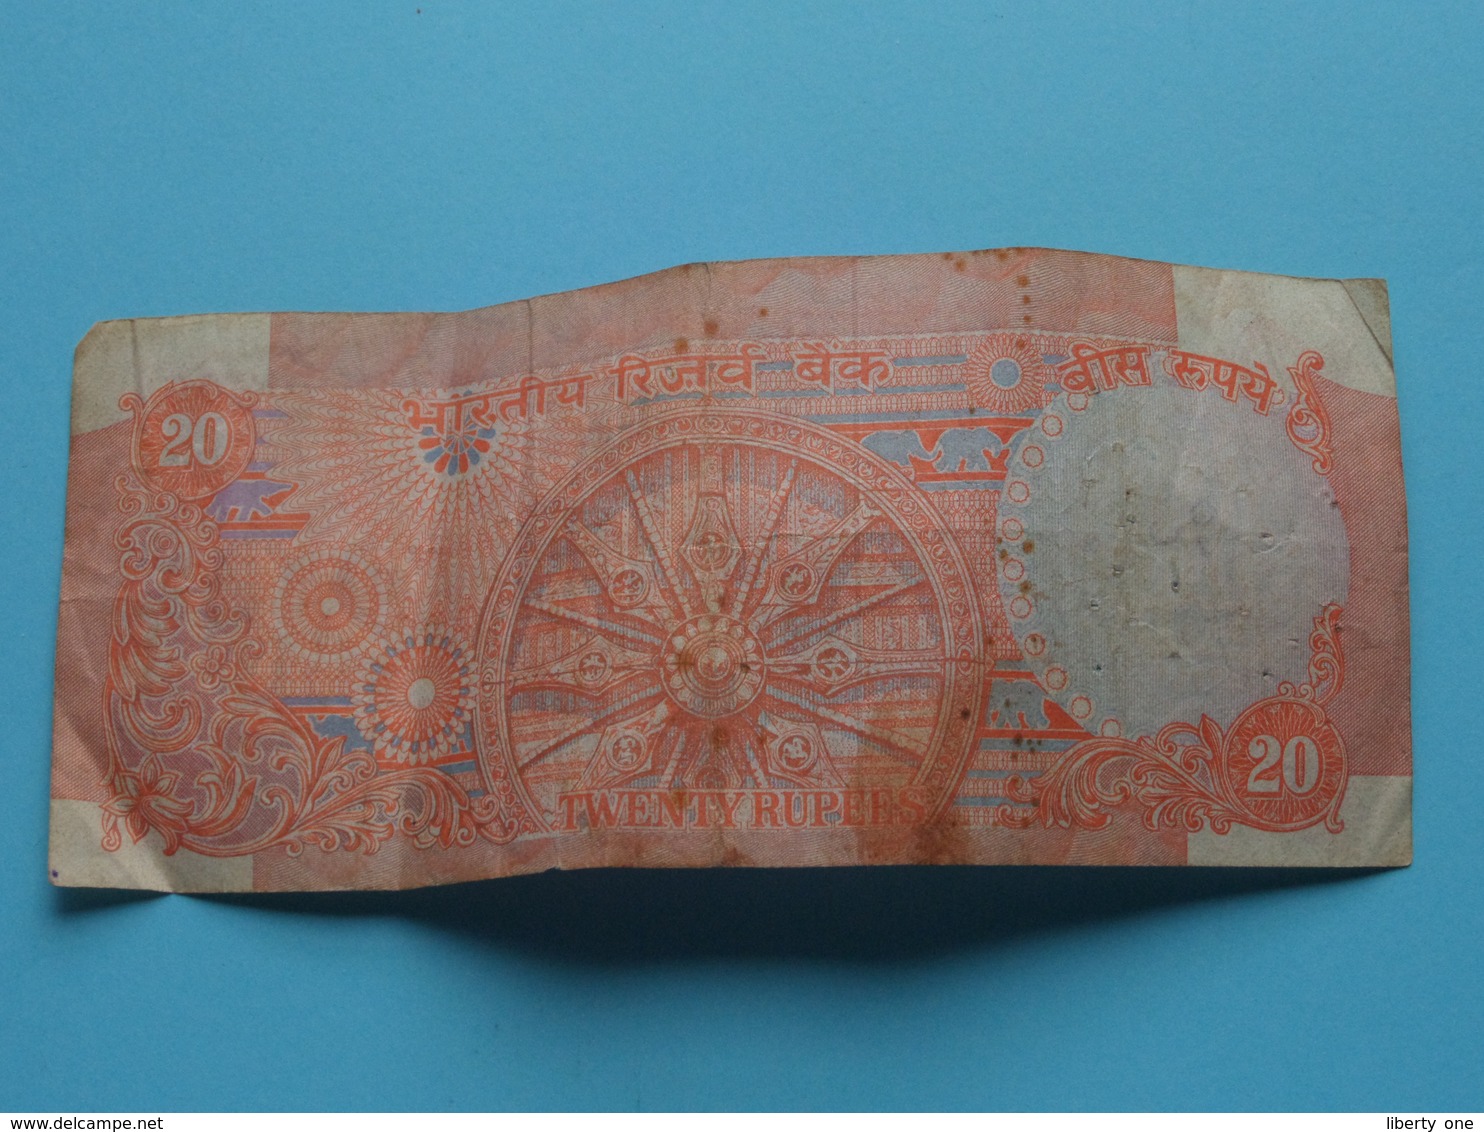 20 ( Twenty ) RUPEES : 47K 962564 ( Reserve Bank Of India ) ! - Indien